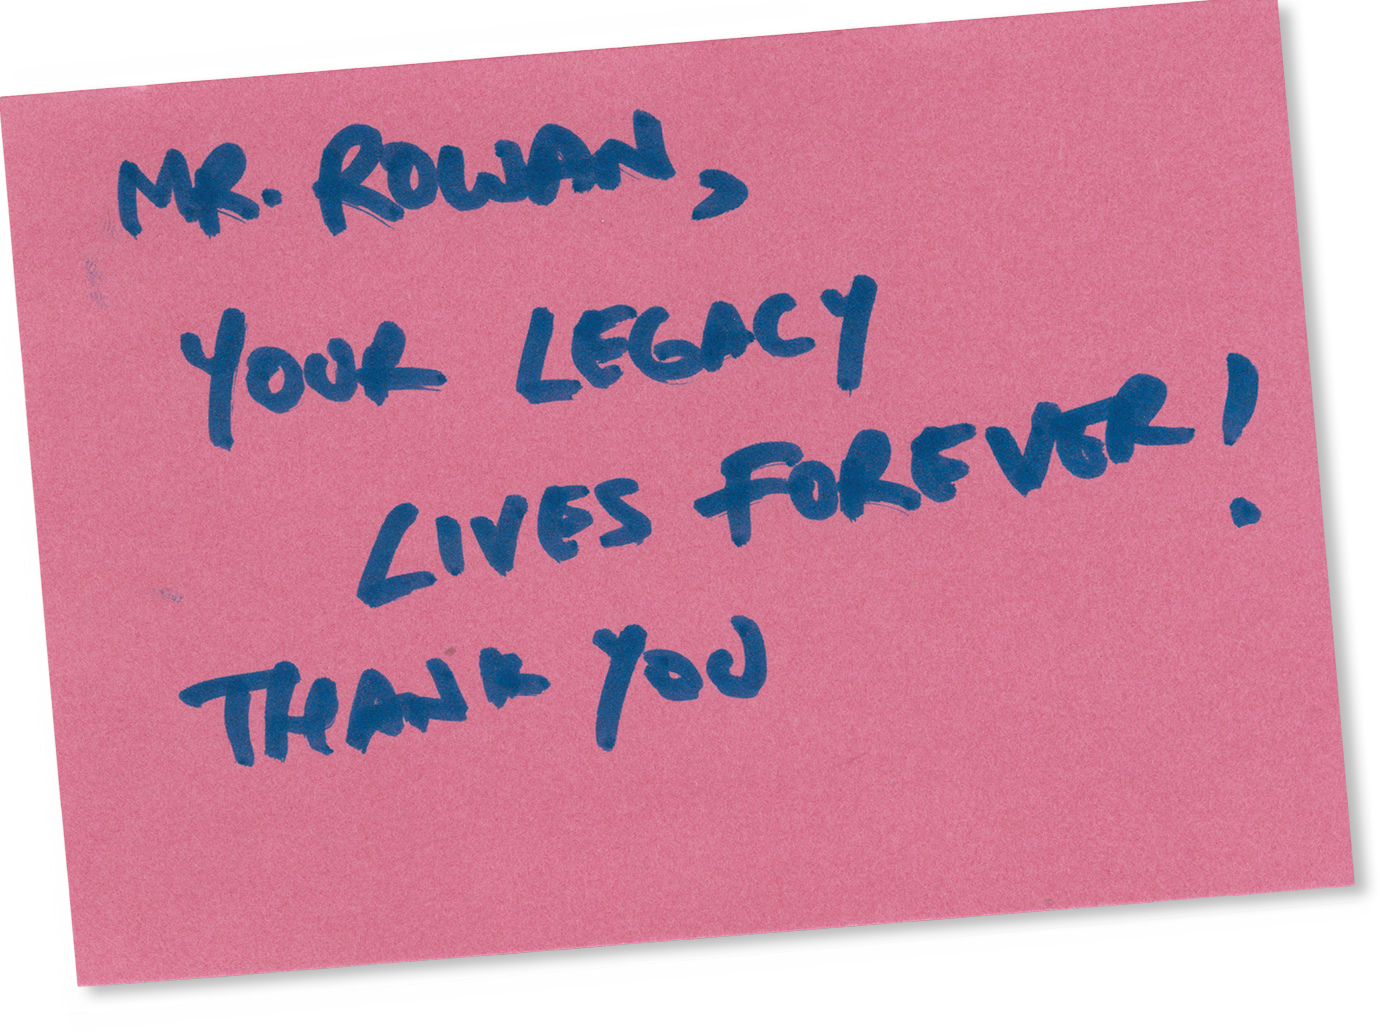 Henry Rowan handwritten note